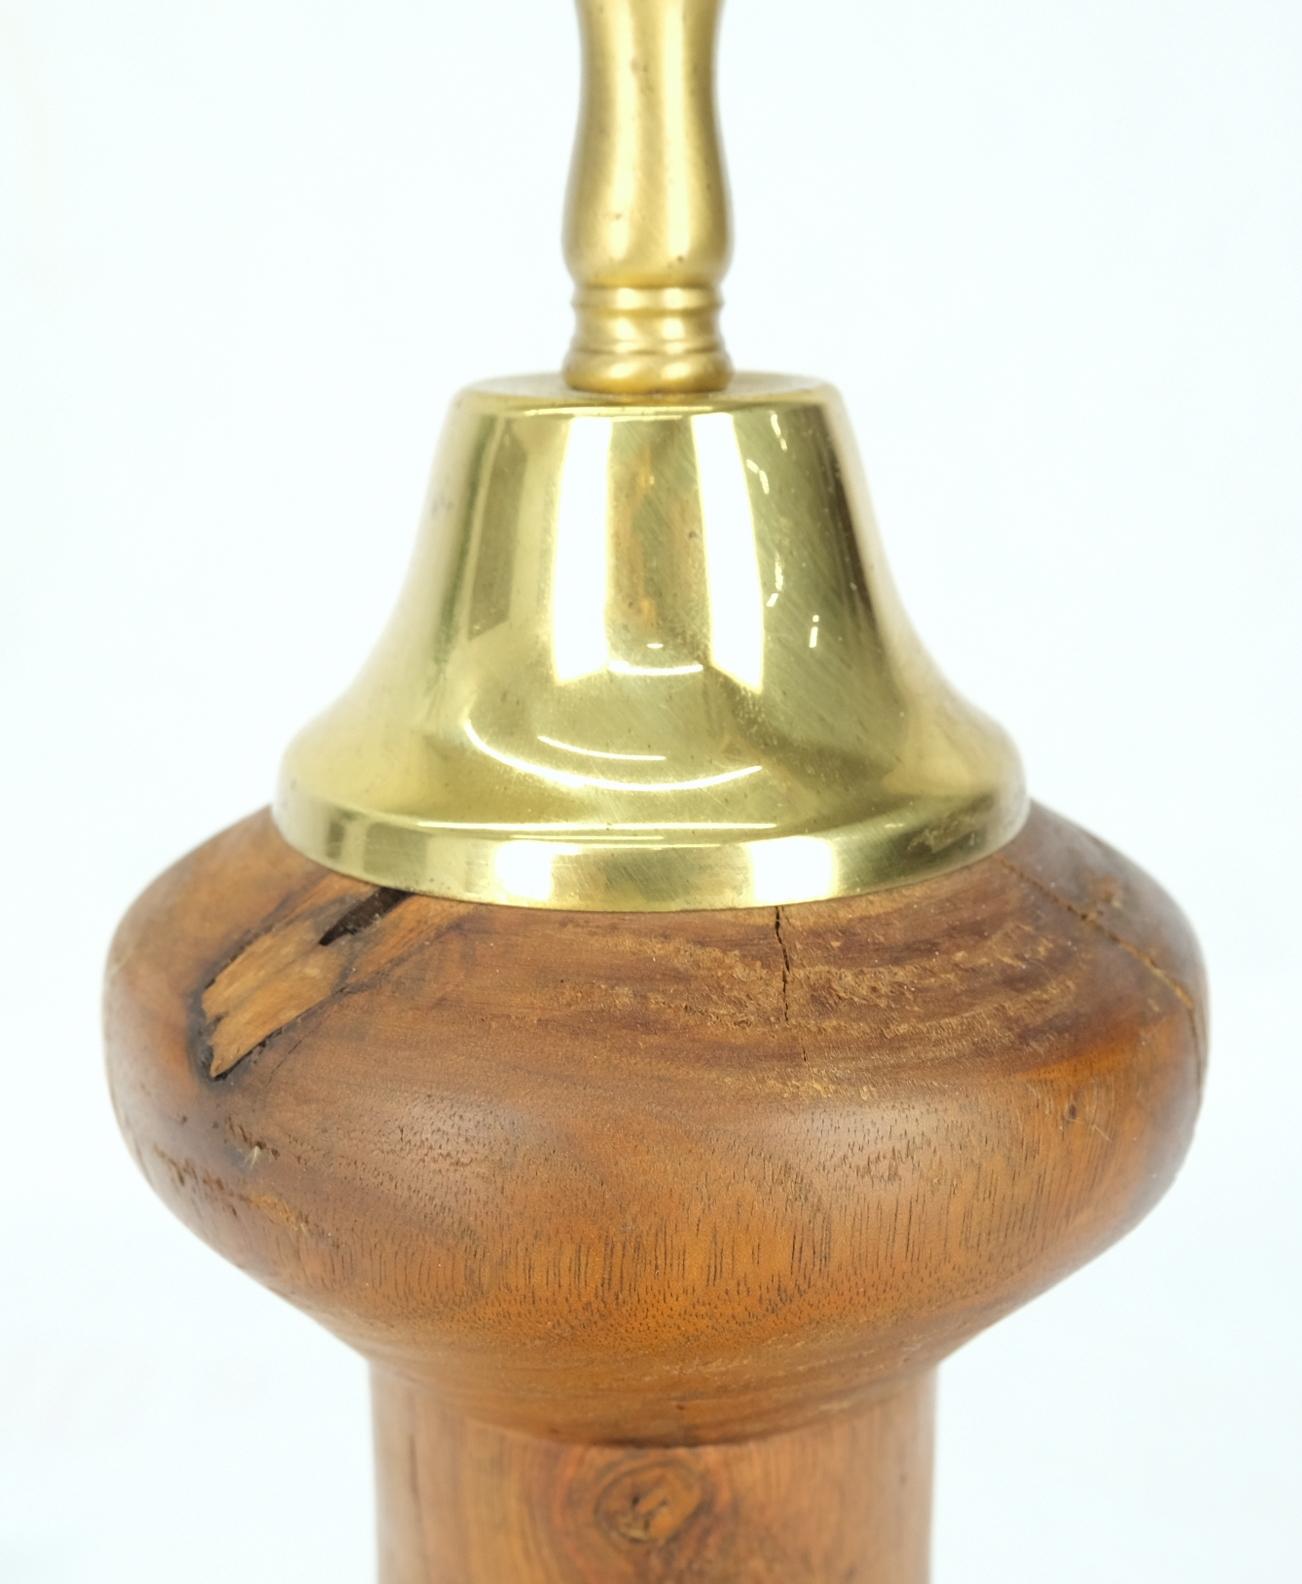 20th Century Turned Walnut or Teak Mid-Century Modern Table Lamp, c.1970s For Sale